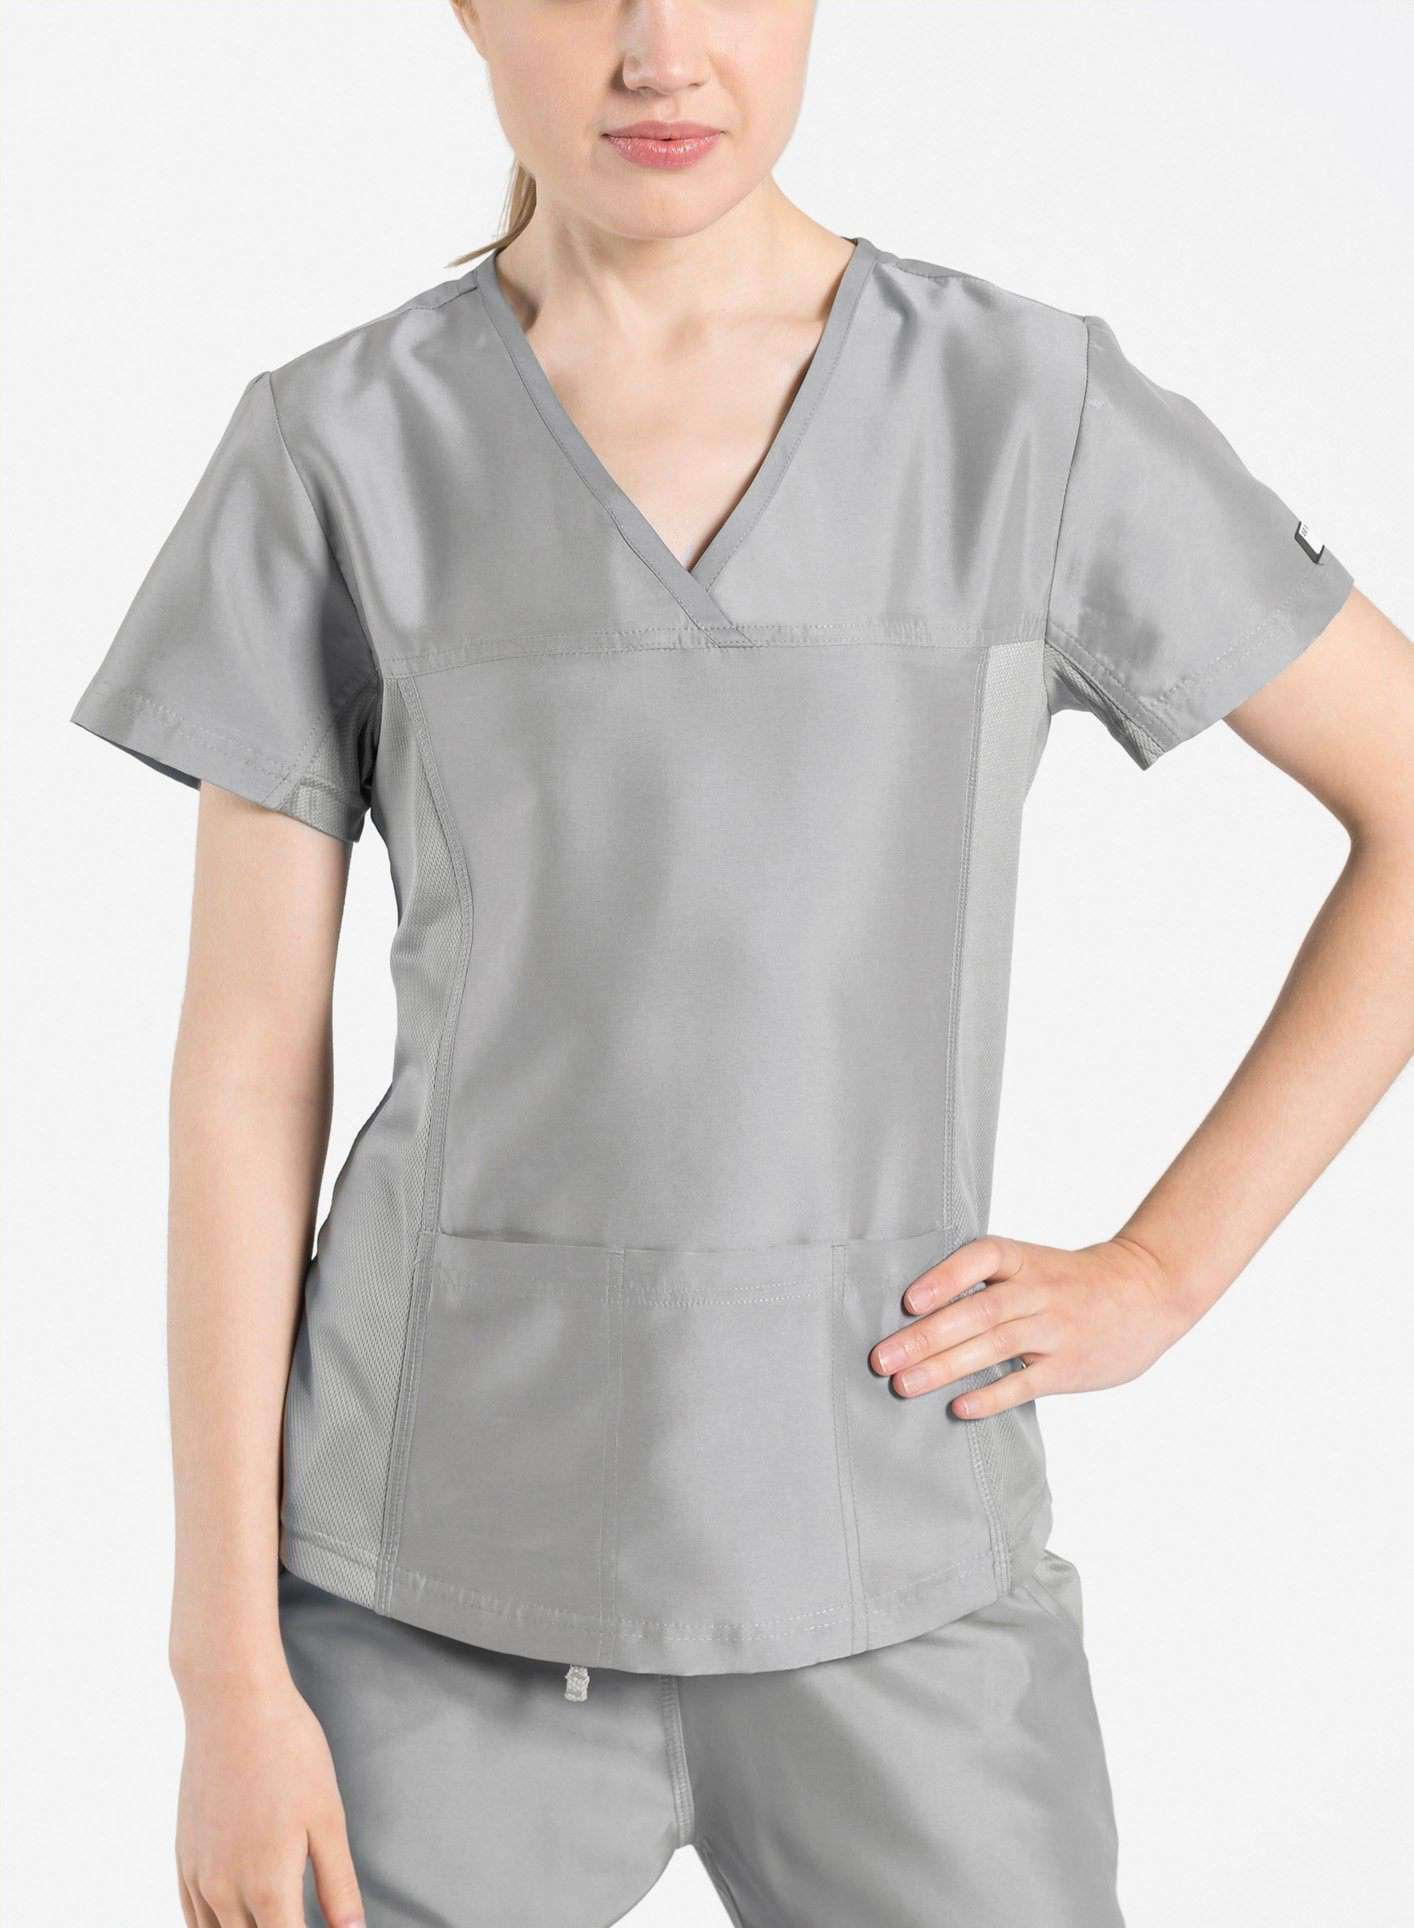 womens Elements short sleeve three pocket scrub top light gray